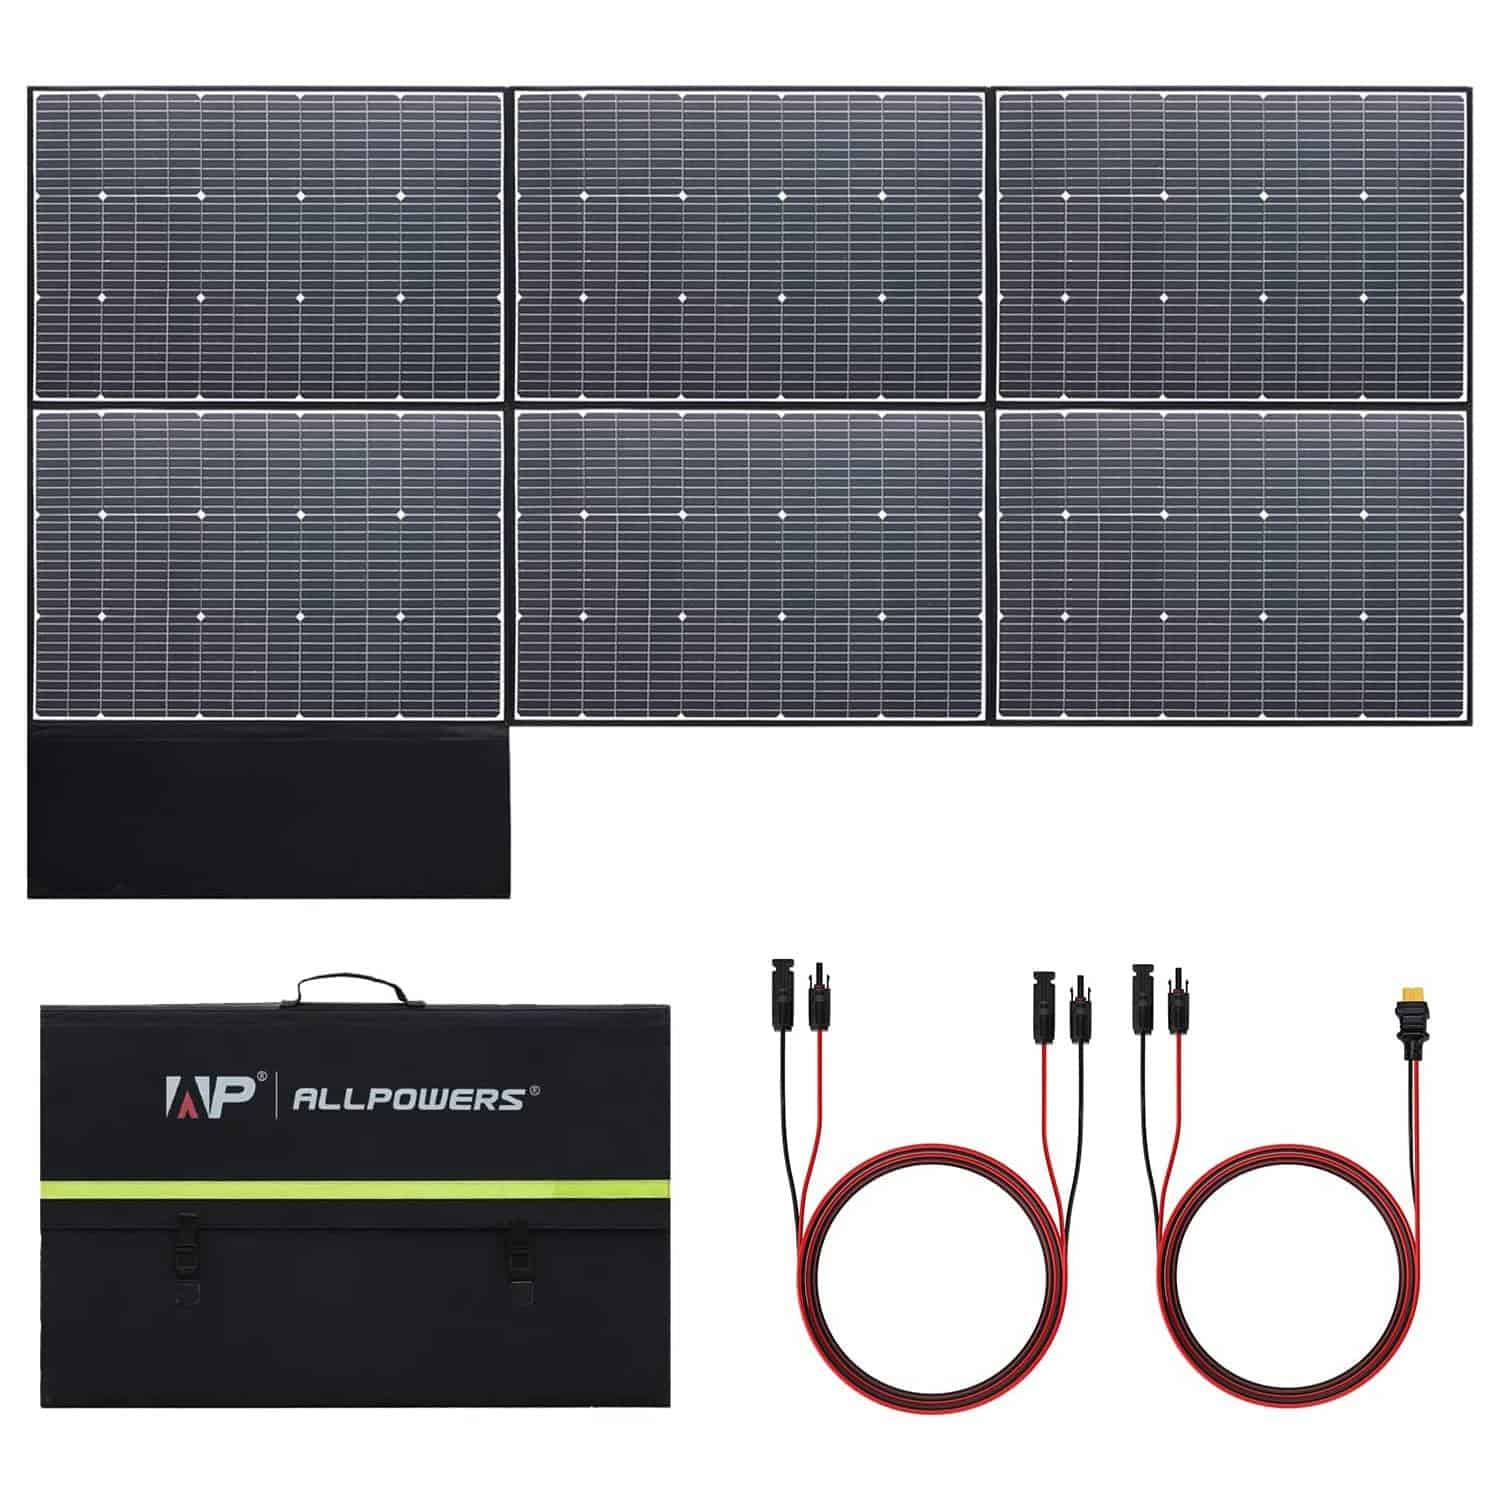 ALLPOWERS SP039 600W Monocrystalline Portable Solar Panel Review